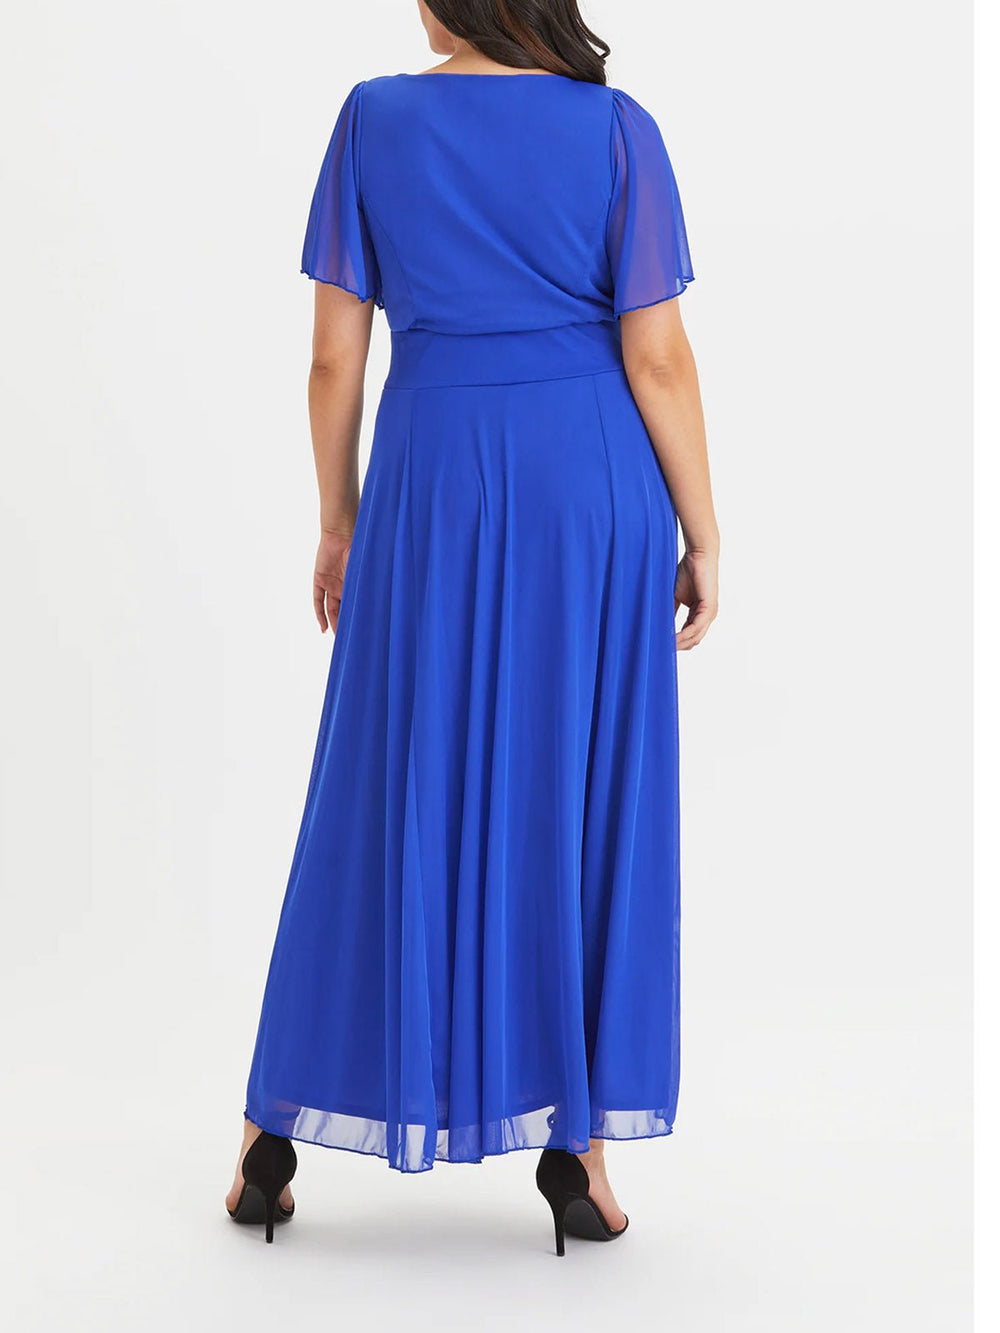 Blue Bolero Wrap Bodice Plus Size Maxi Dress - Curvy Chic Boutique